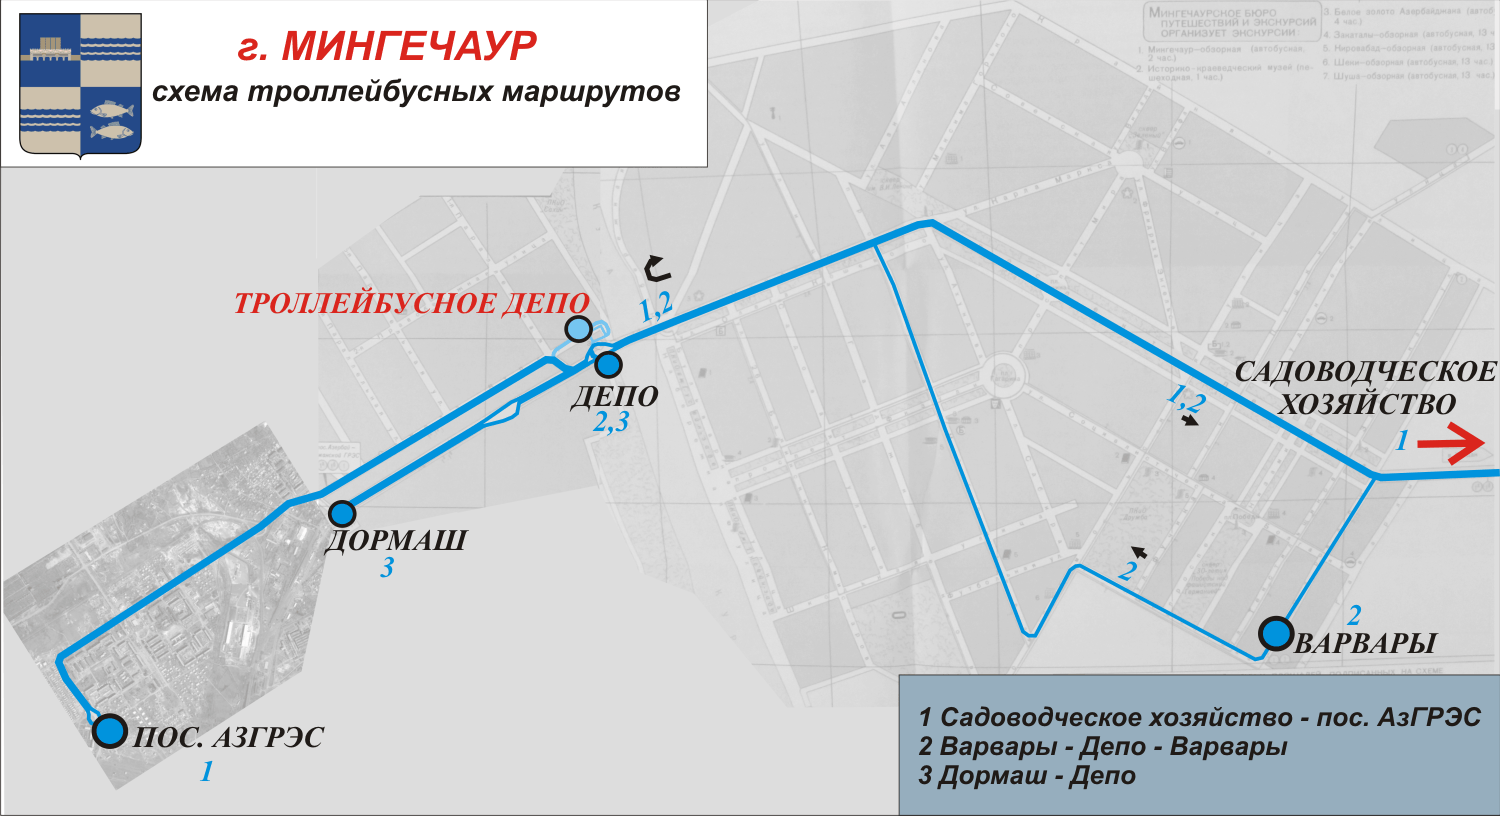 Mingechaur — Maps